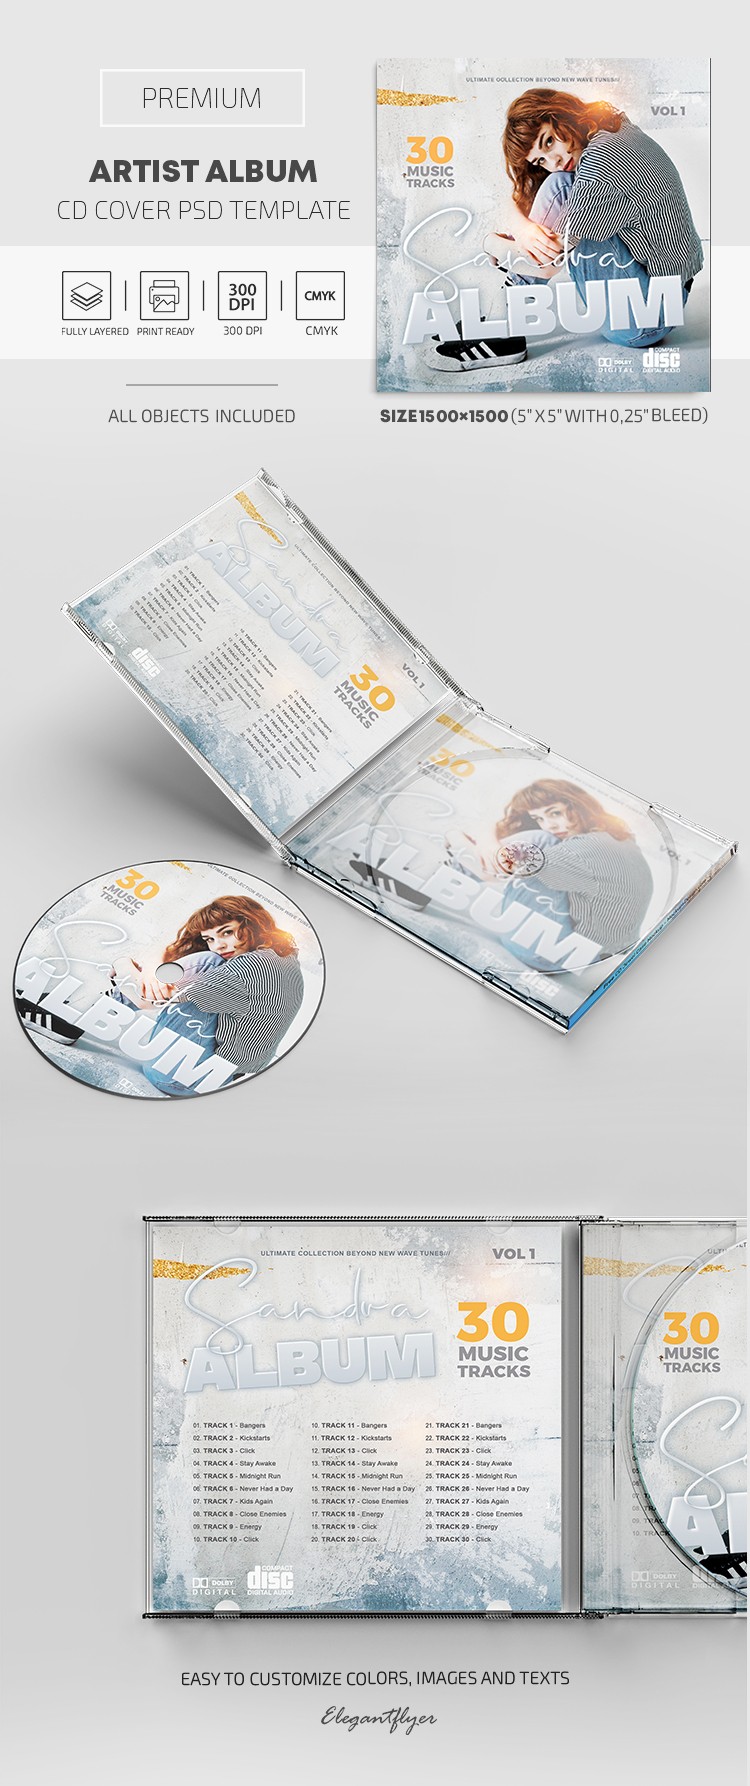 Okładka płyty CD Artysty Album. by ElegantFlyer